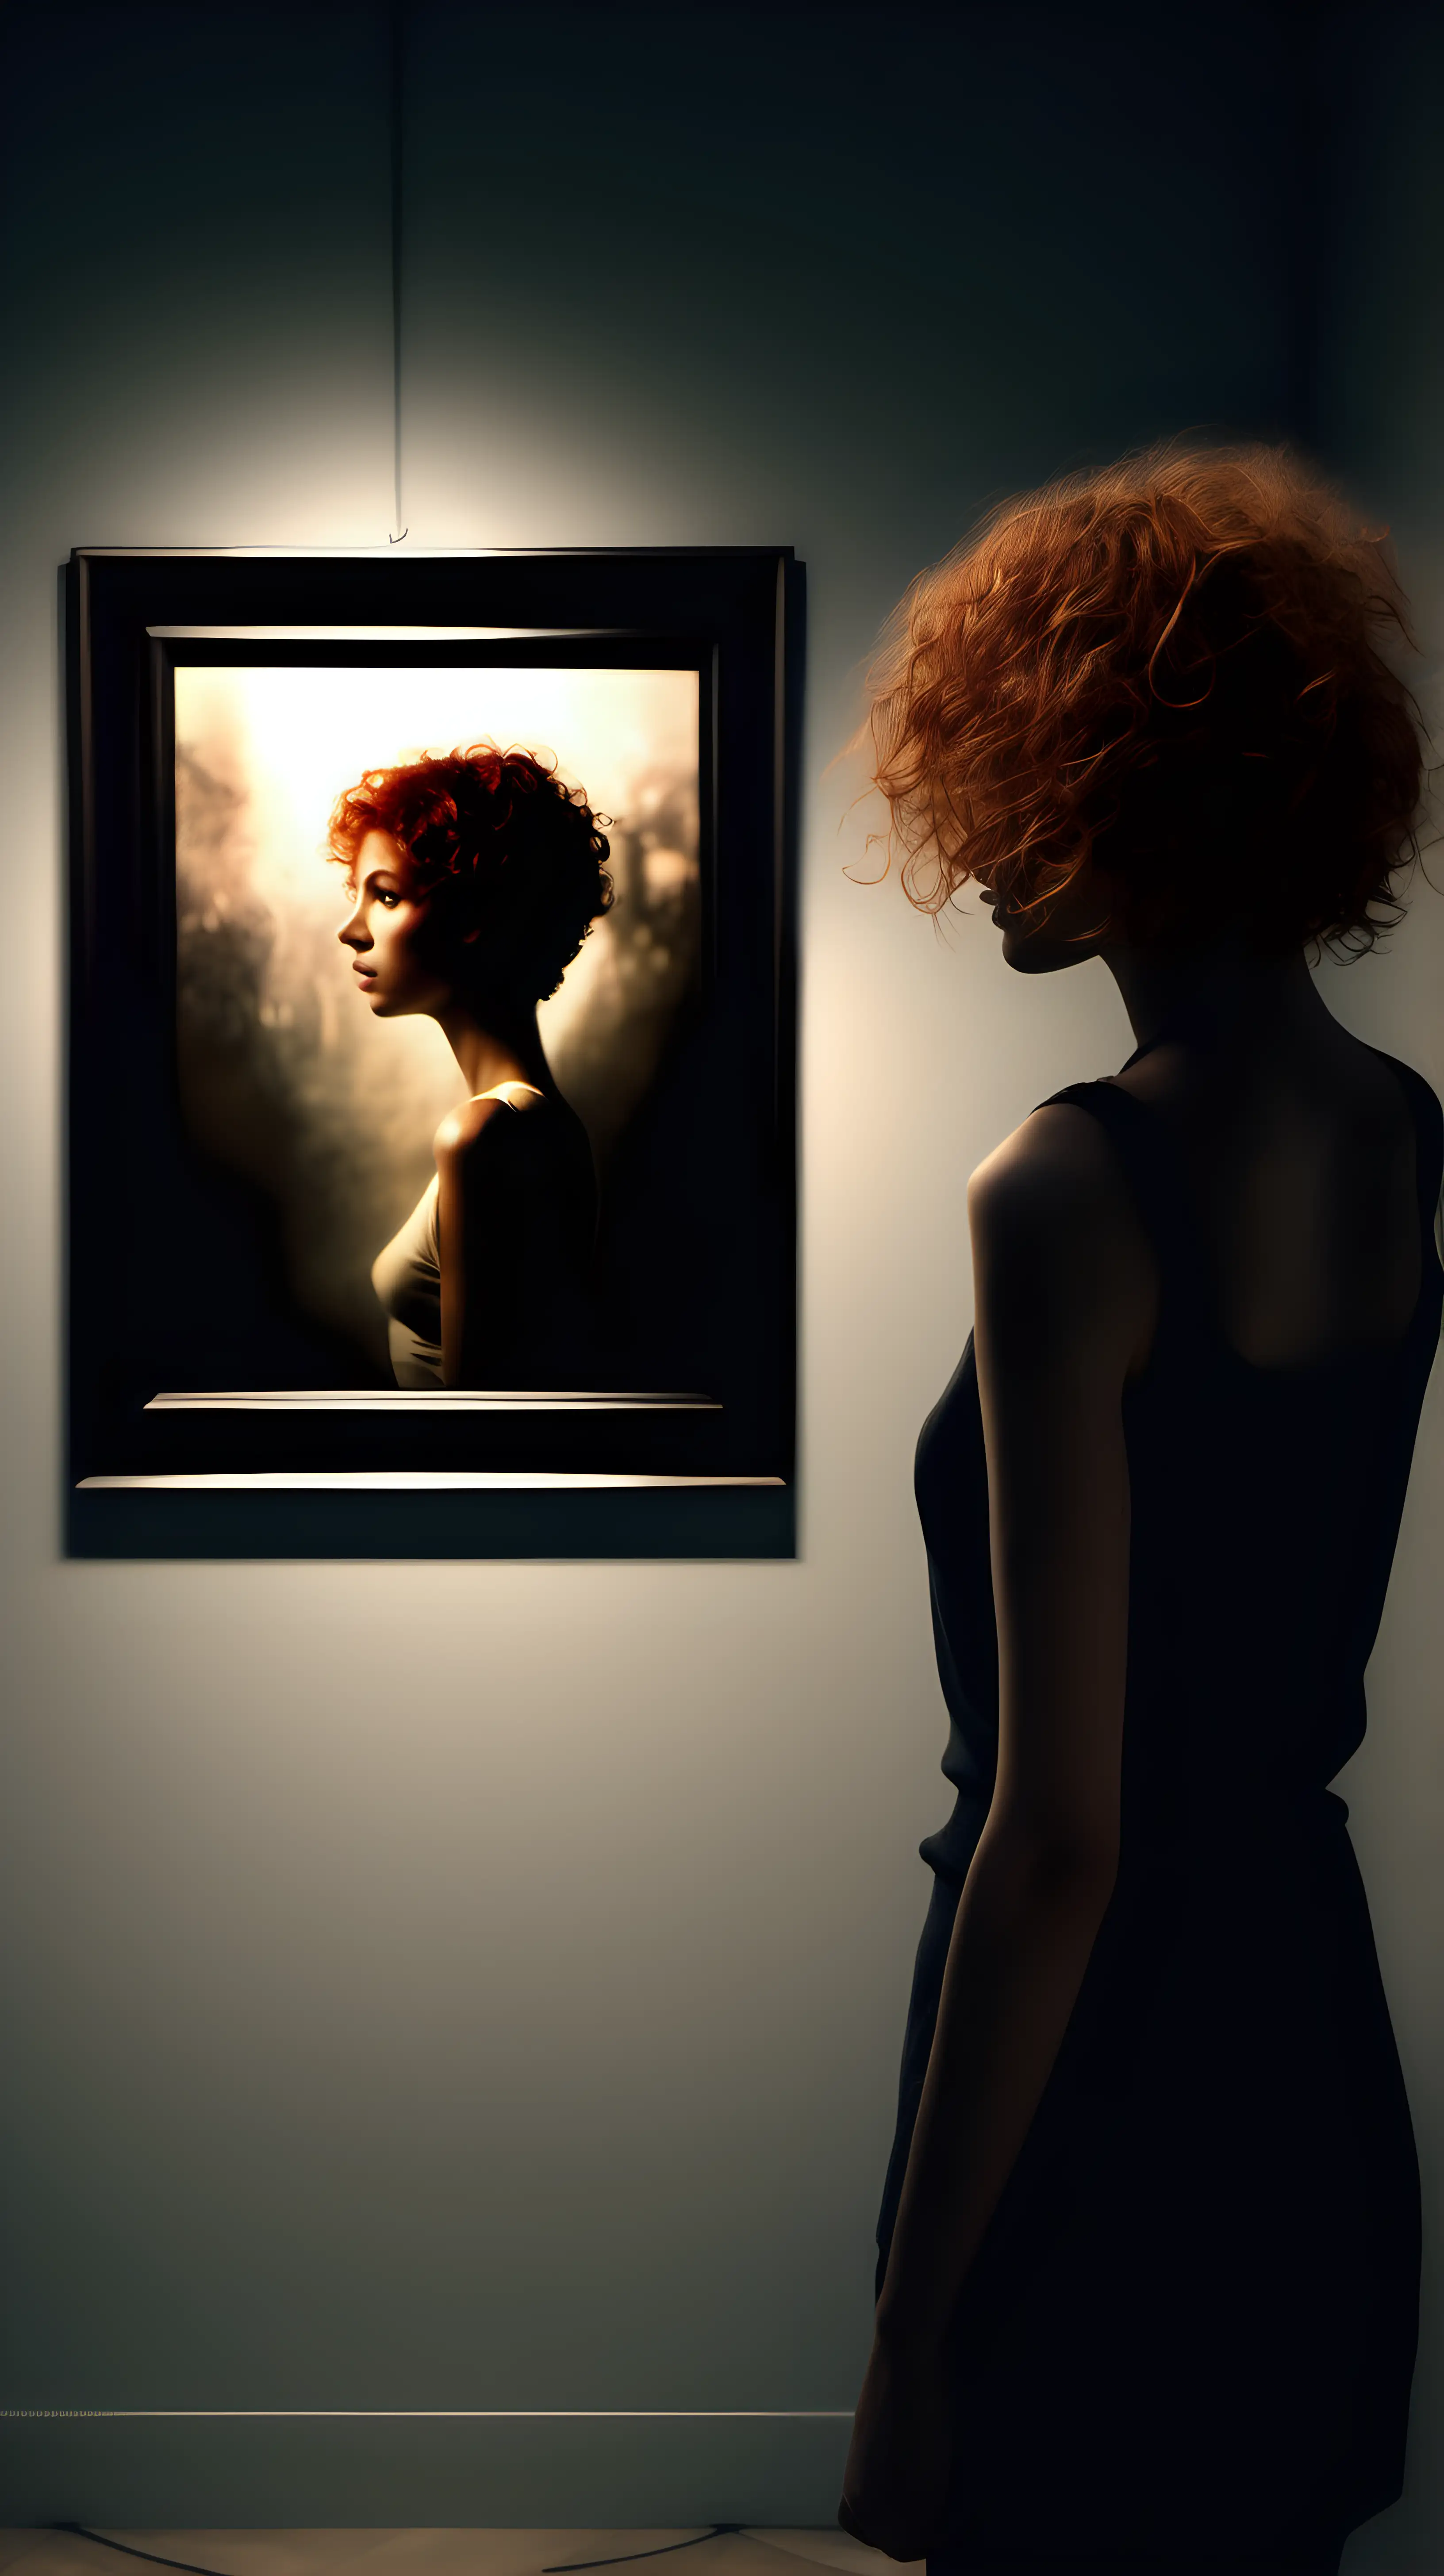 CurlyHaired Woman Admiring Art in Enchanting Atmosphere